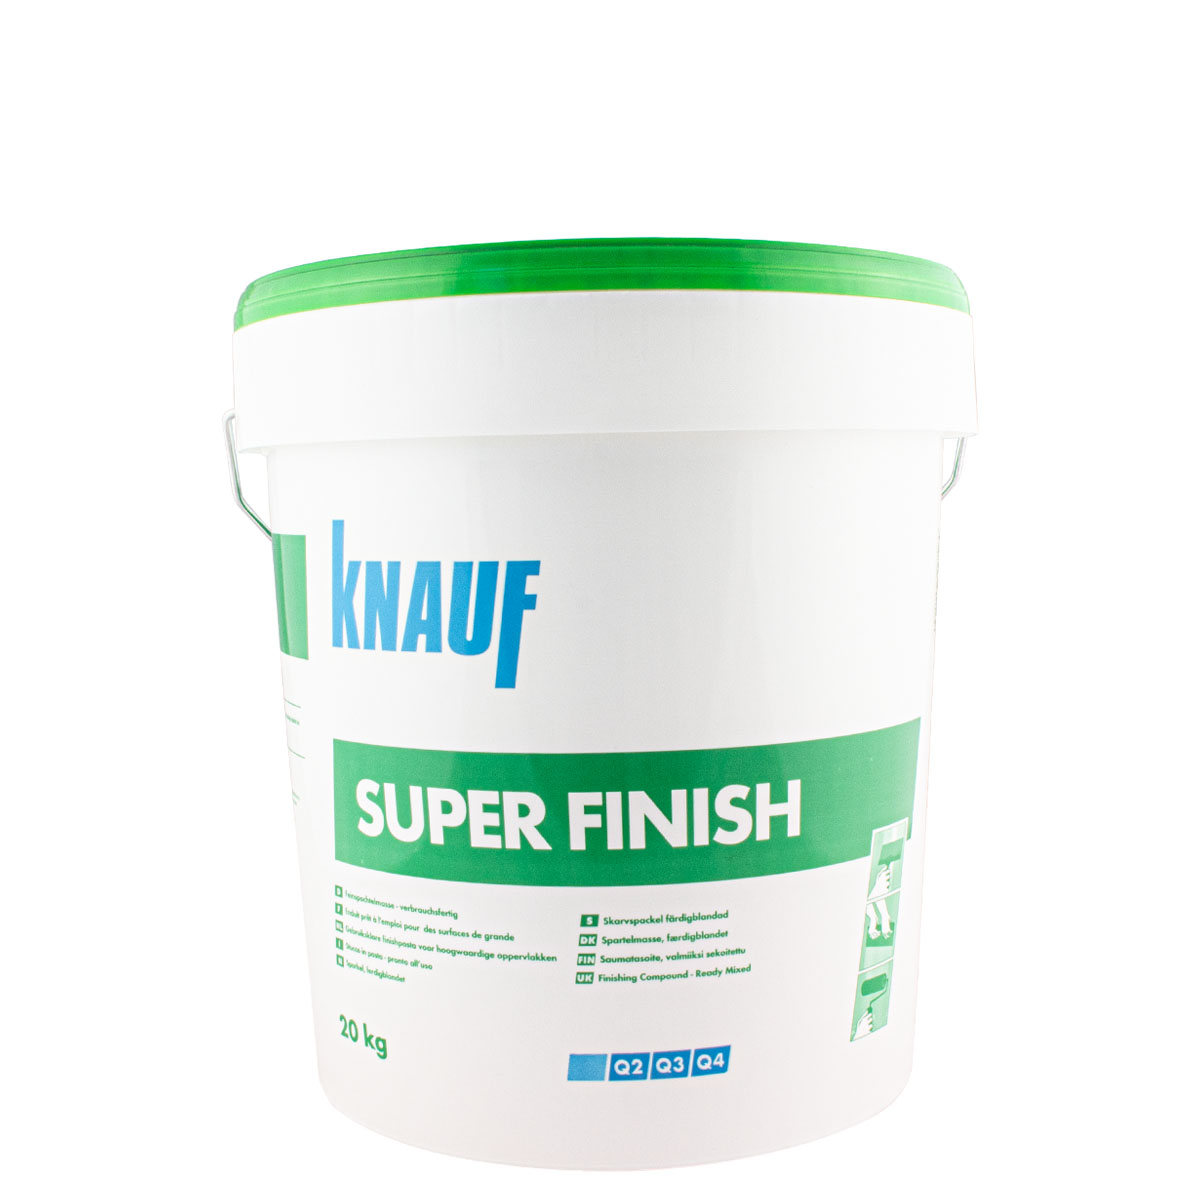 Knauf Super Finish 20kg, Sheetrock, Feinspachtelmasse, Q2-Q4